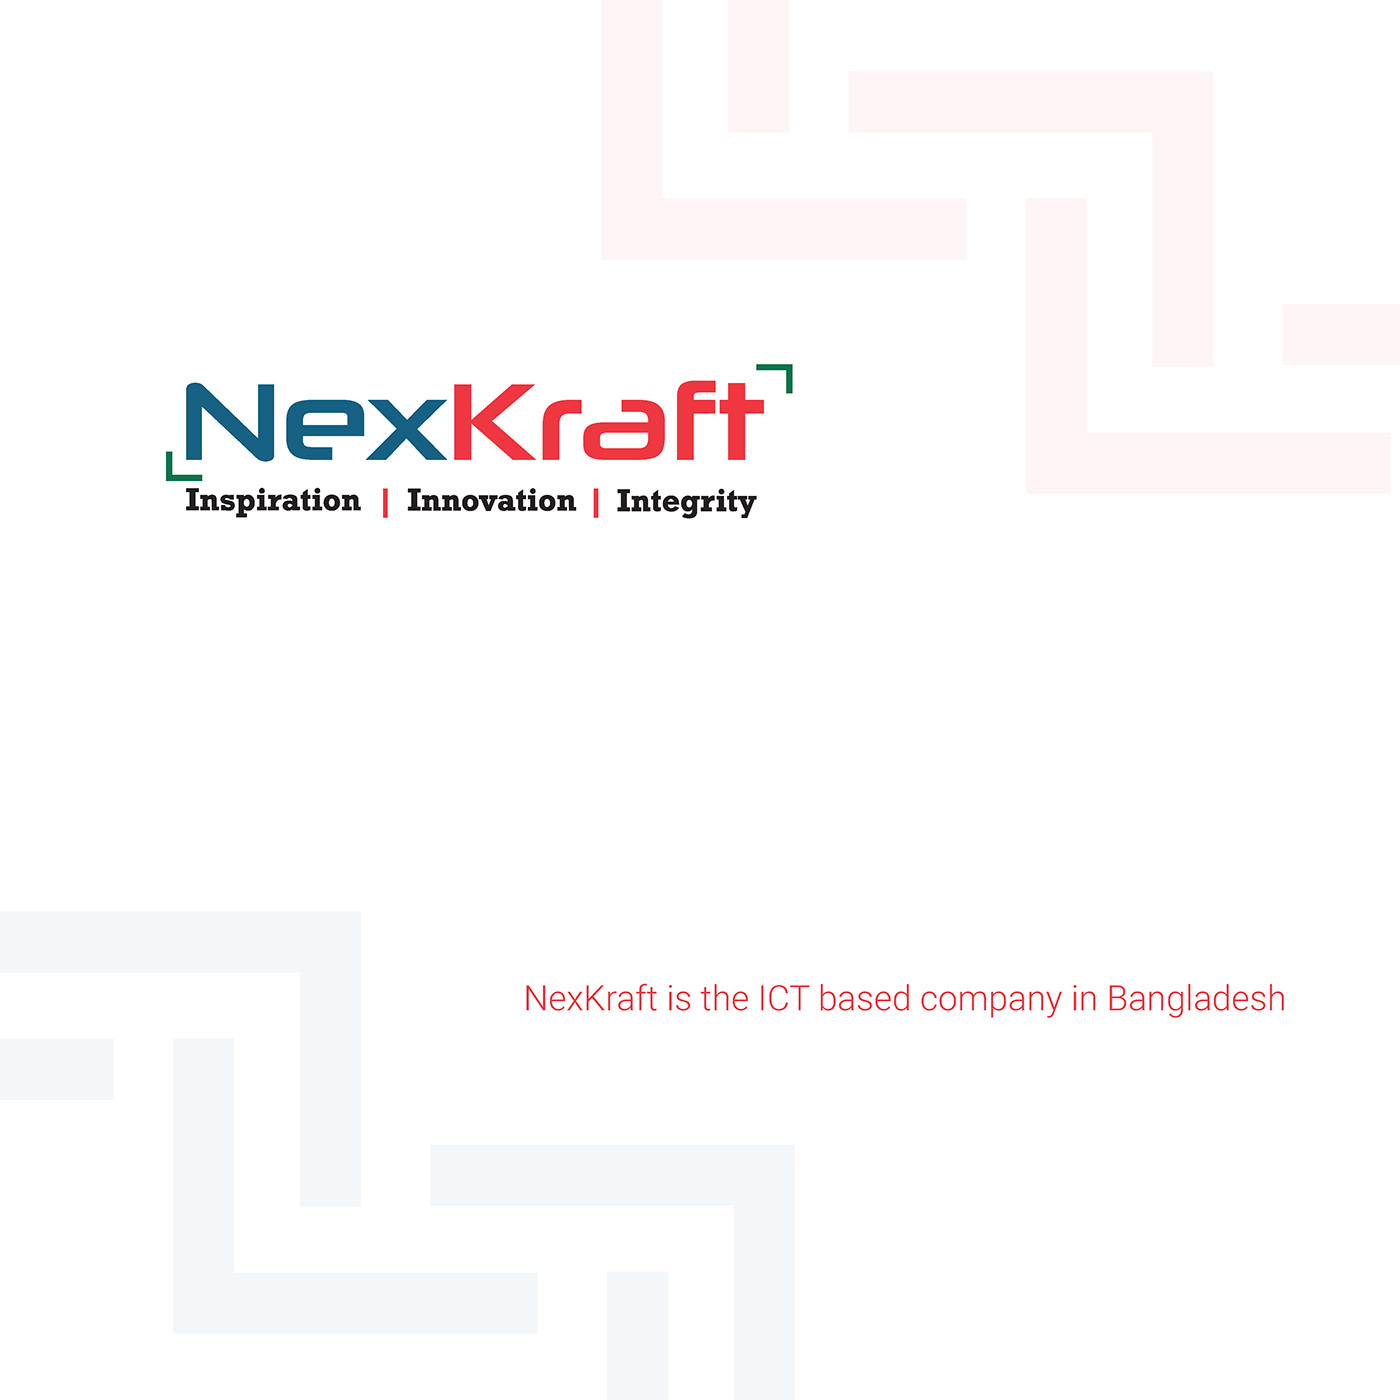 NexKraft branding by Blackboard.